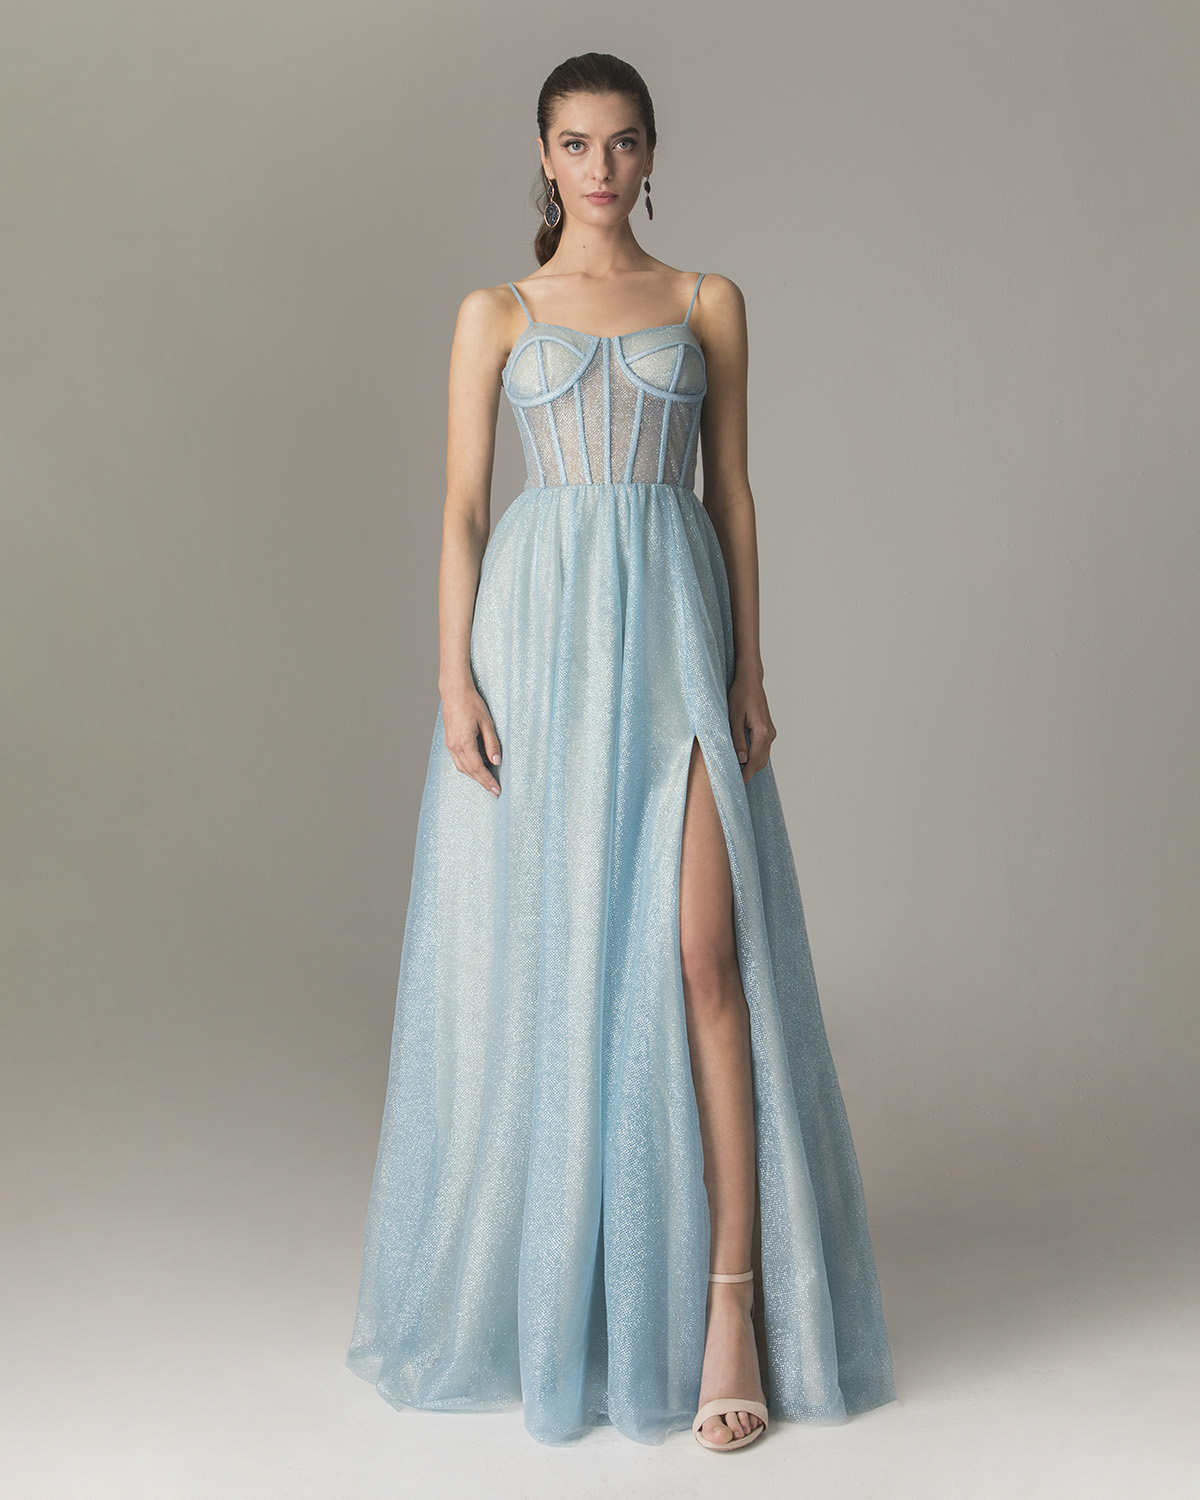 LUANN - Long dress with shining fabric